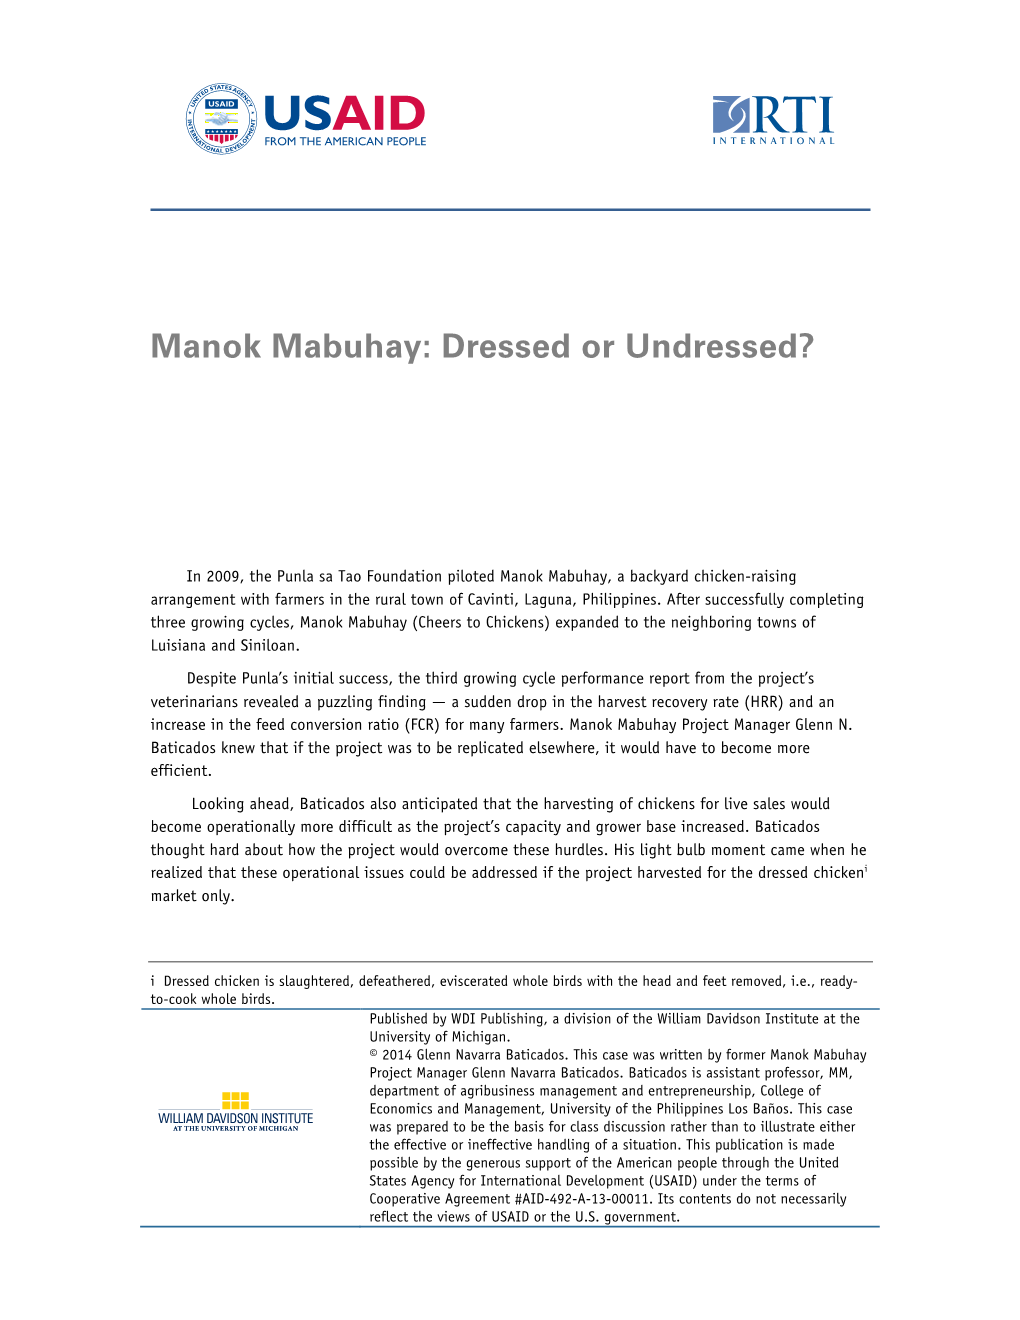 Manok Mabuhay: Dressed Or Undressed?